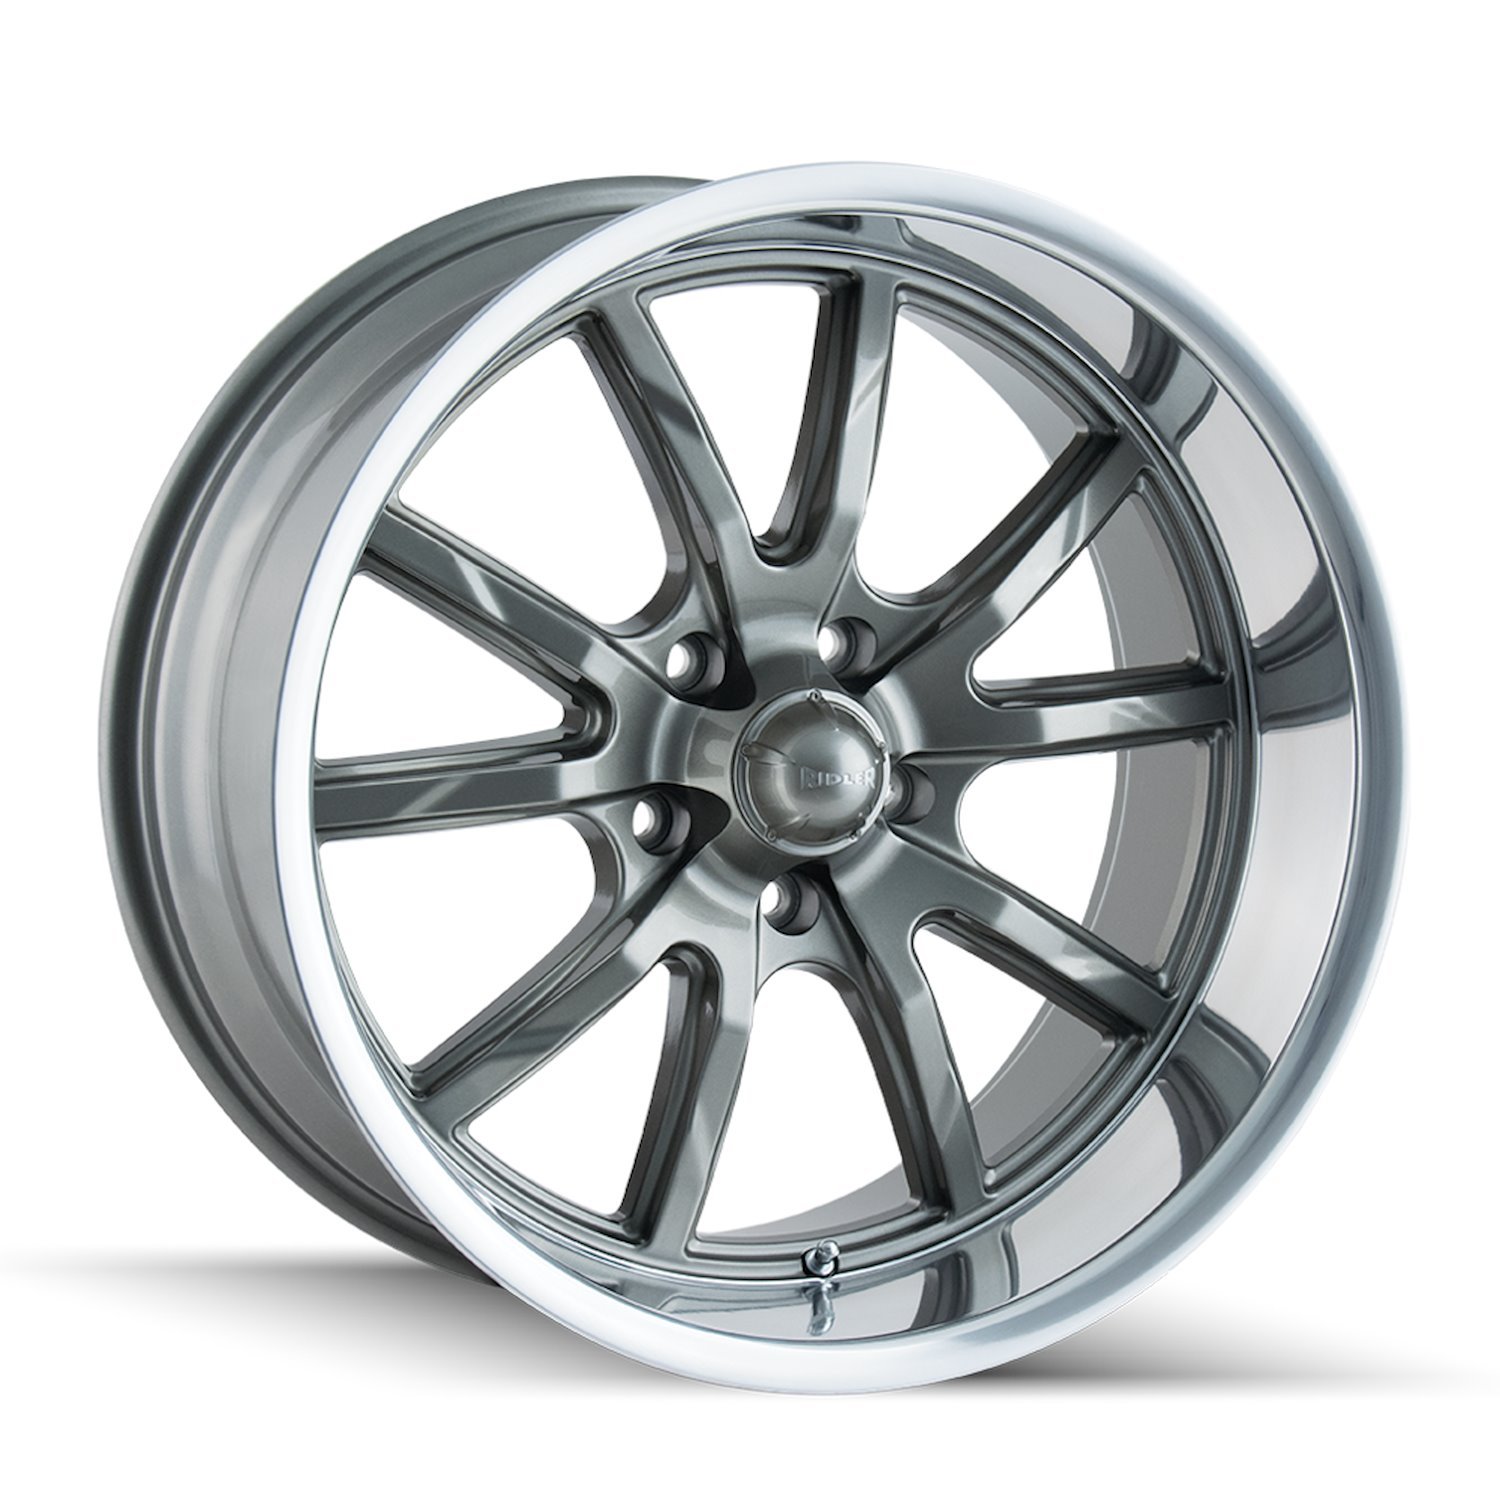 650-2865G 650-Series Wheel [Size: 20" x 8.50"] Gloss Grey Polished Finish